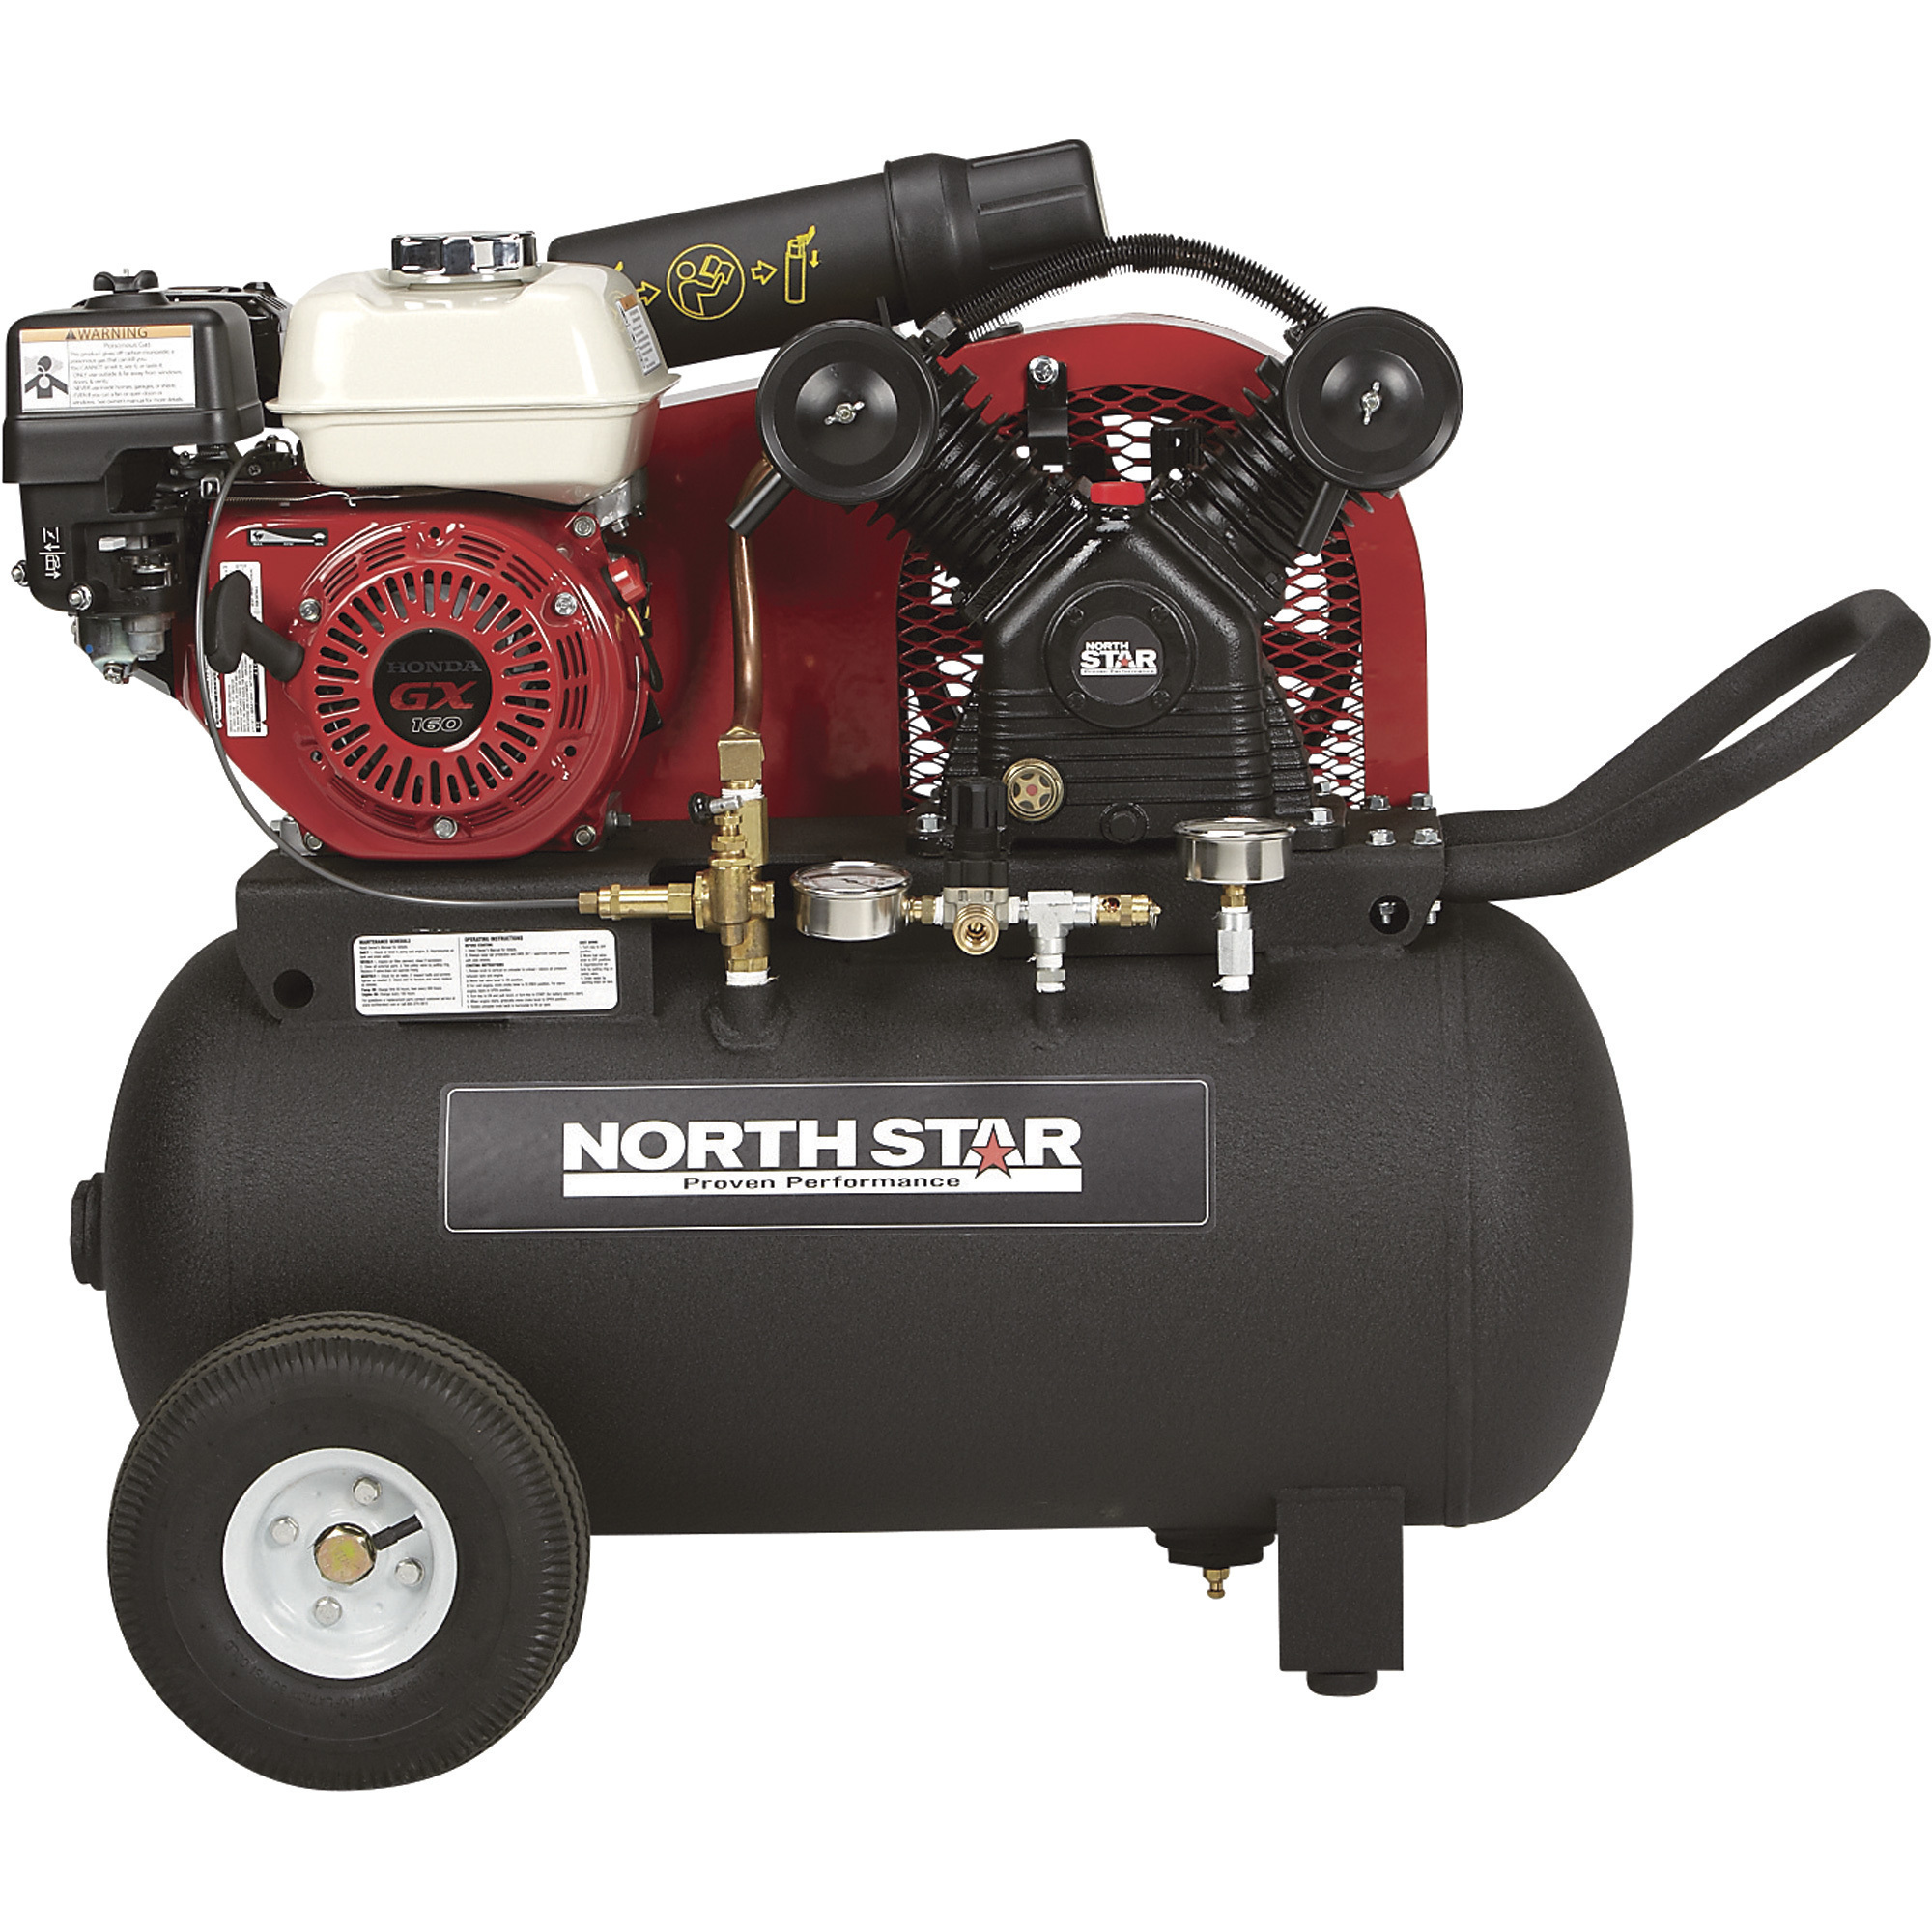 NorthStar 20-Gallon 13.7 CFM @ 90 PSI Portable Gas-Powered Air Compressor â Honda 163cc OHV Engine, Horizontal Tank